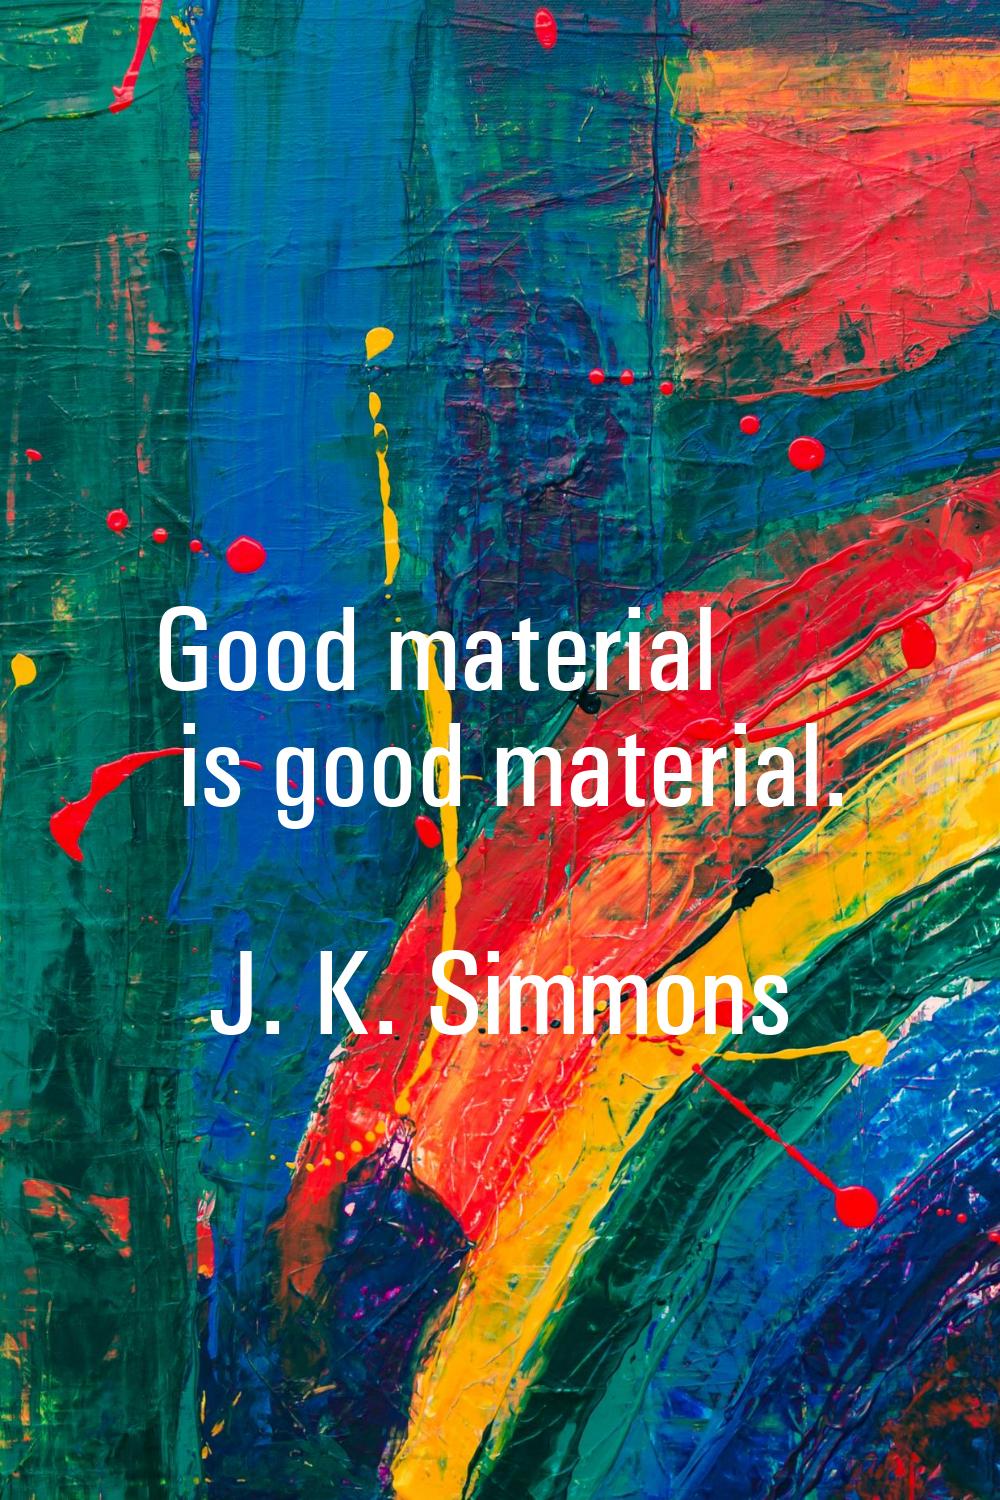 Good material is good material.